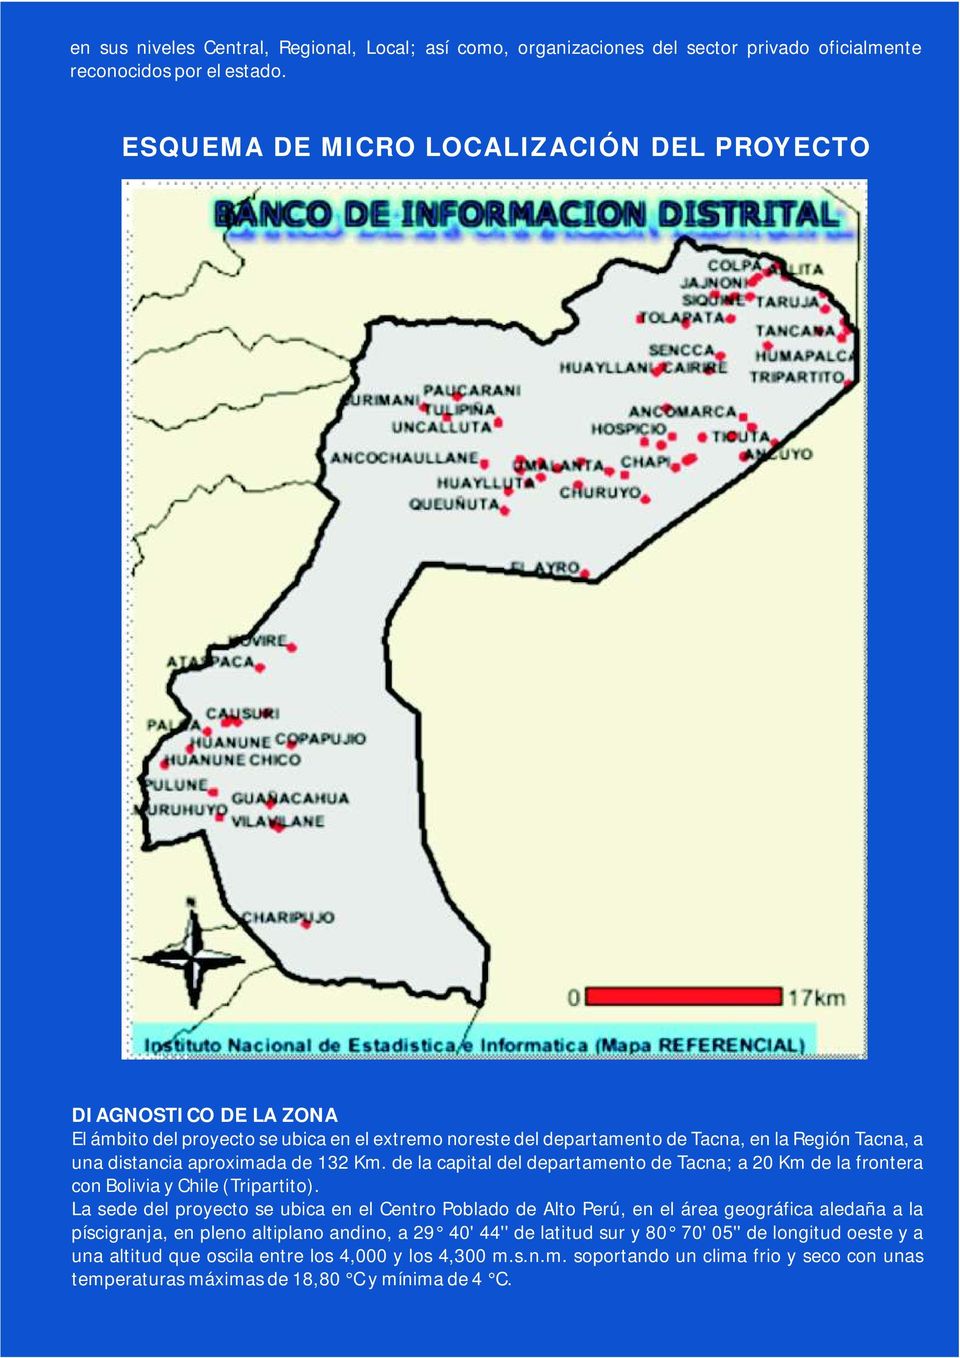 de 132 Km. de la capital del departamento de Tacna; a 20 Km de la frontera con Bolivia y Chile (Tripartito).